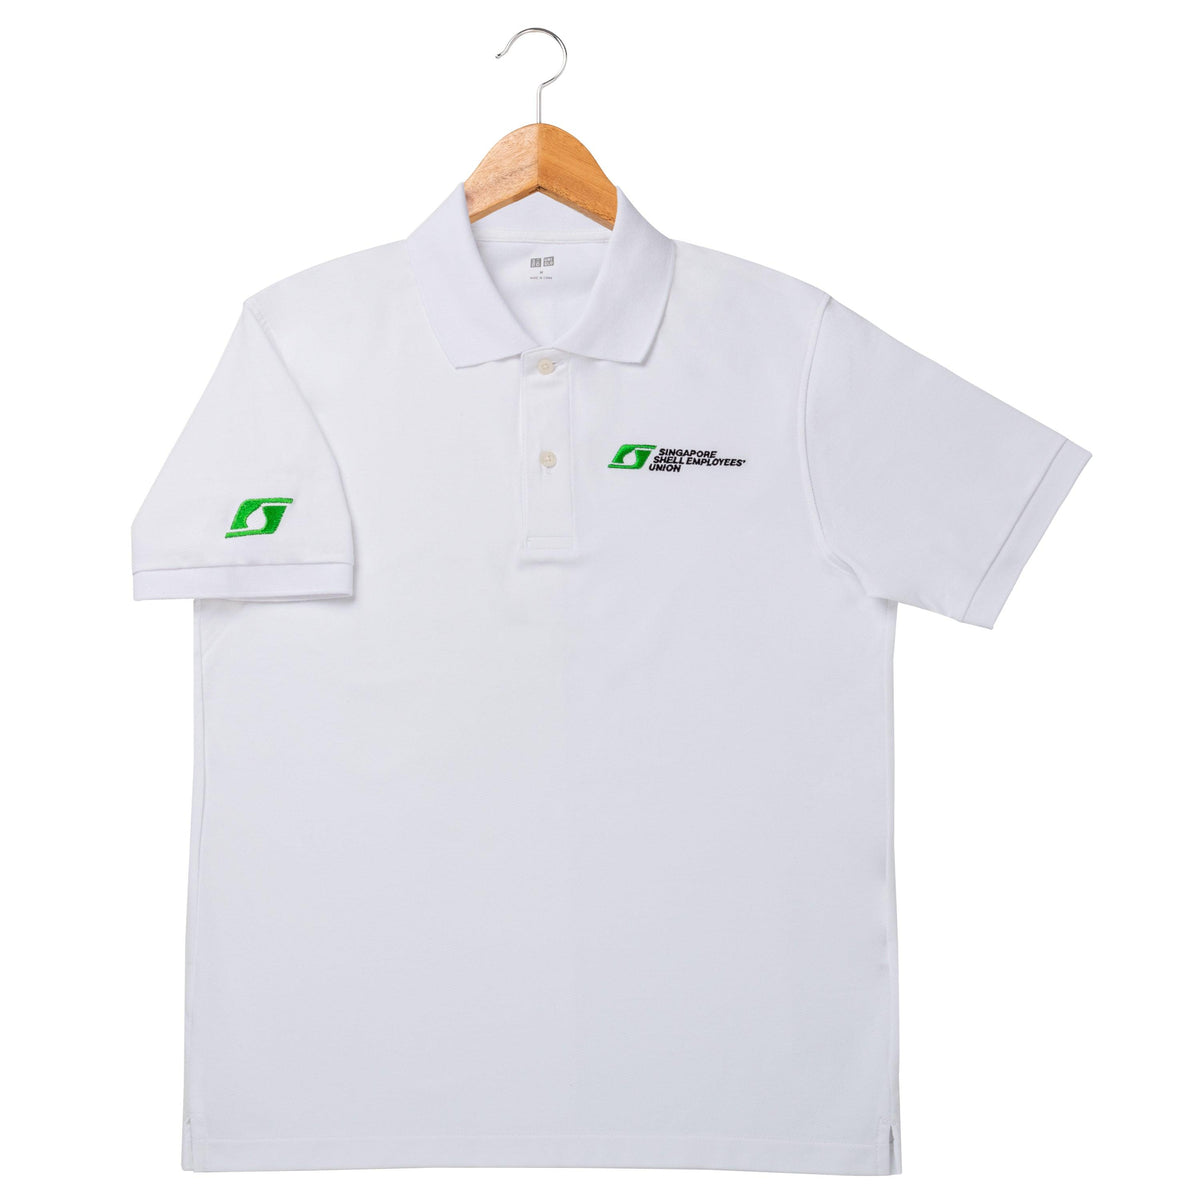 Singapore Shell Employees' Union Dry Pique Short Sleeve Polo Shirt ...